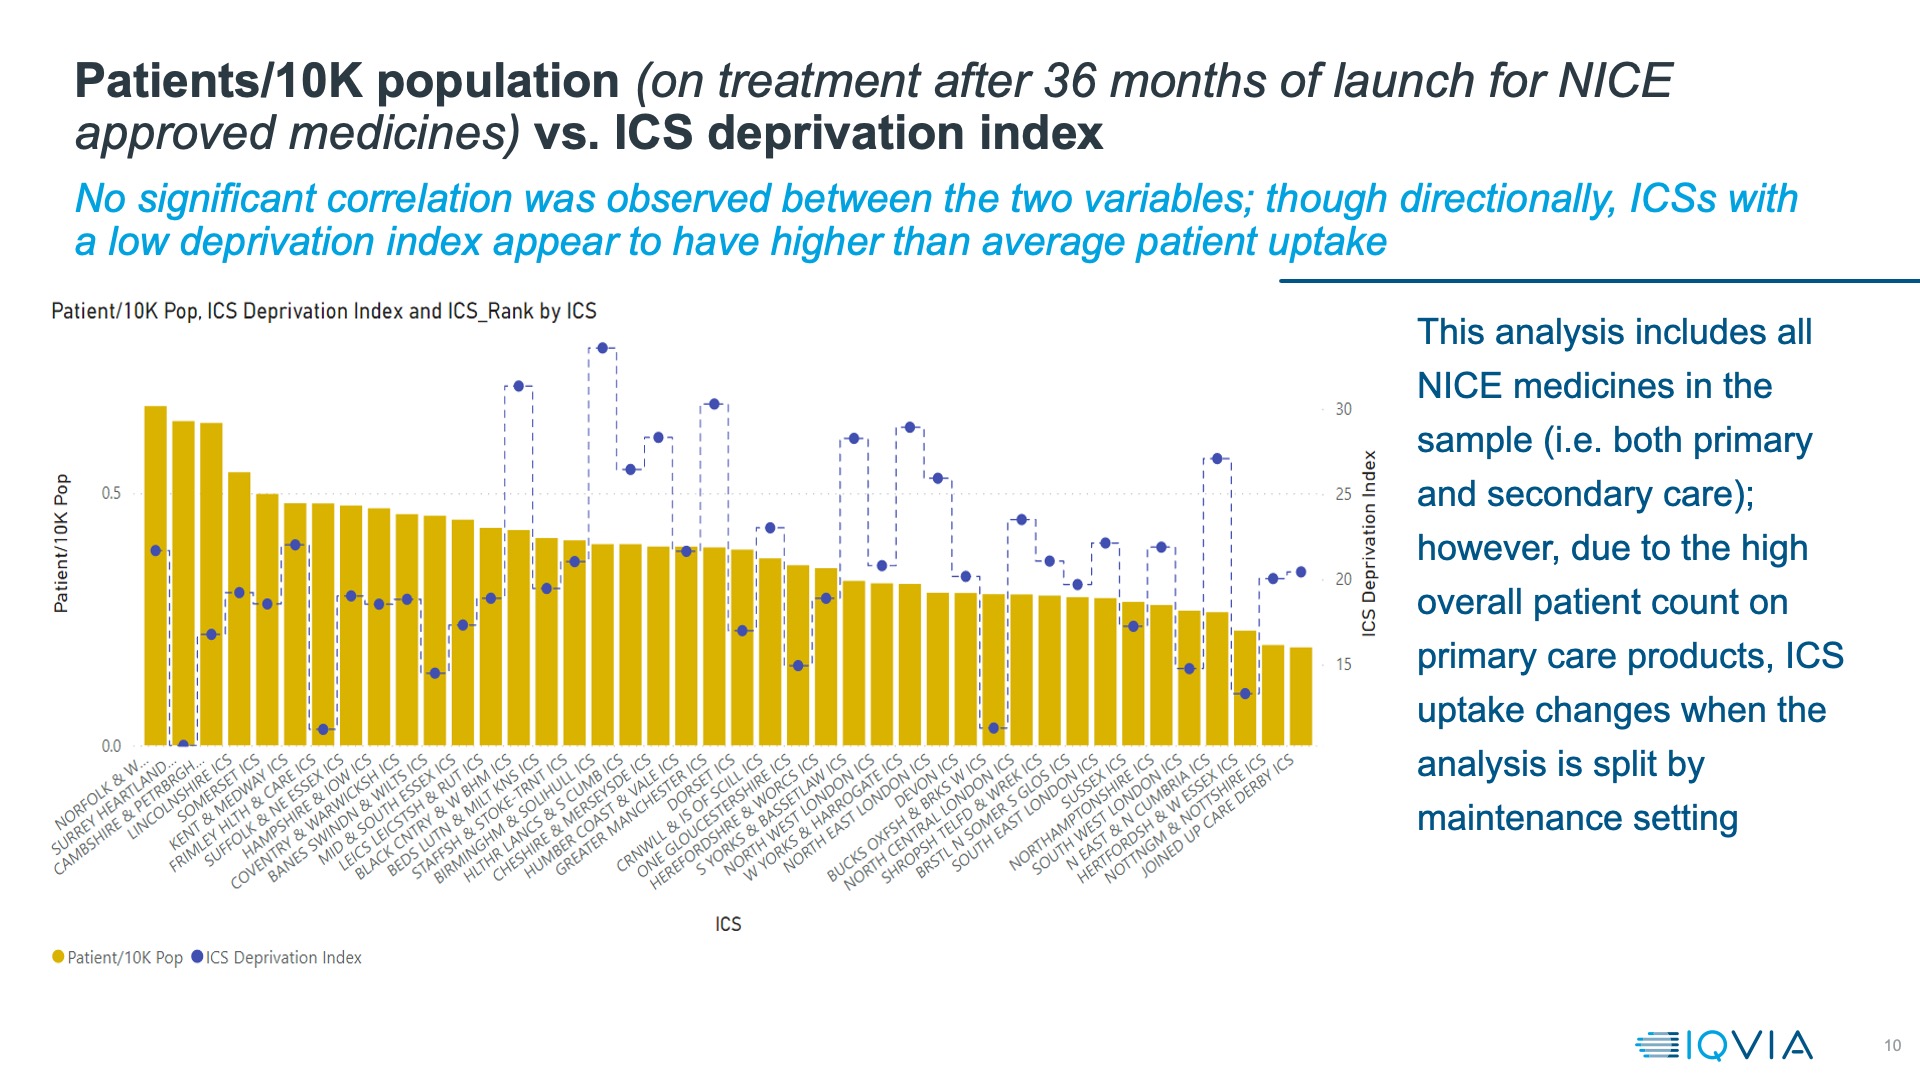 Patients/10K population vs. ICS deprivation index